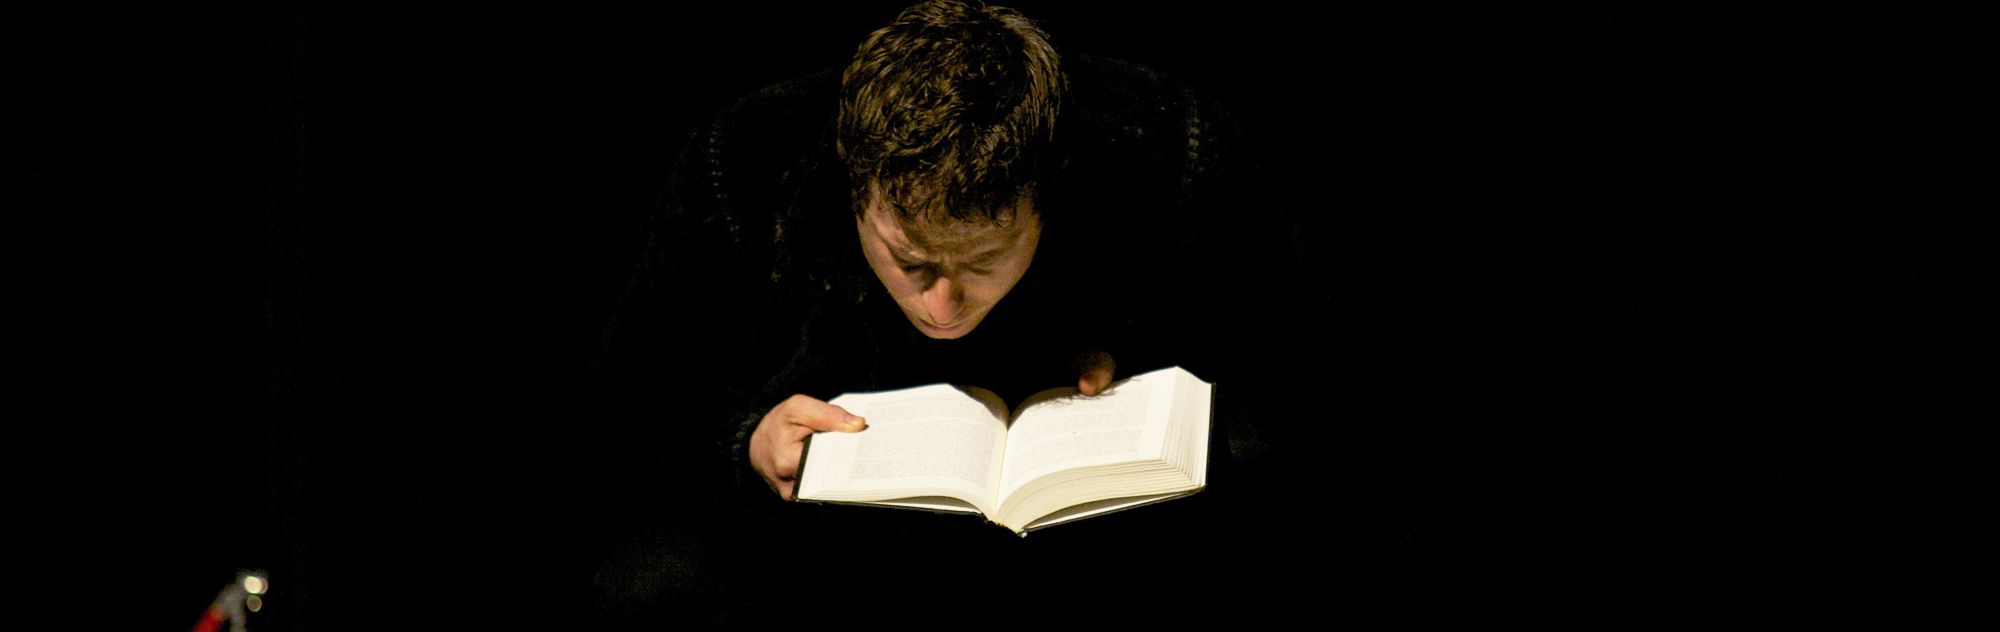 Hamlet reading